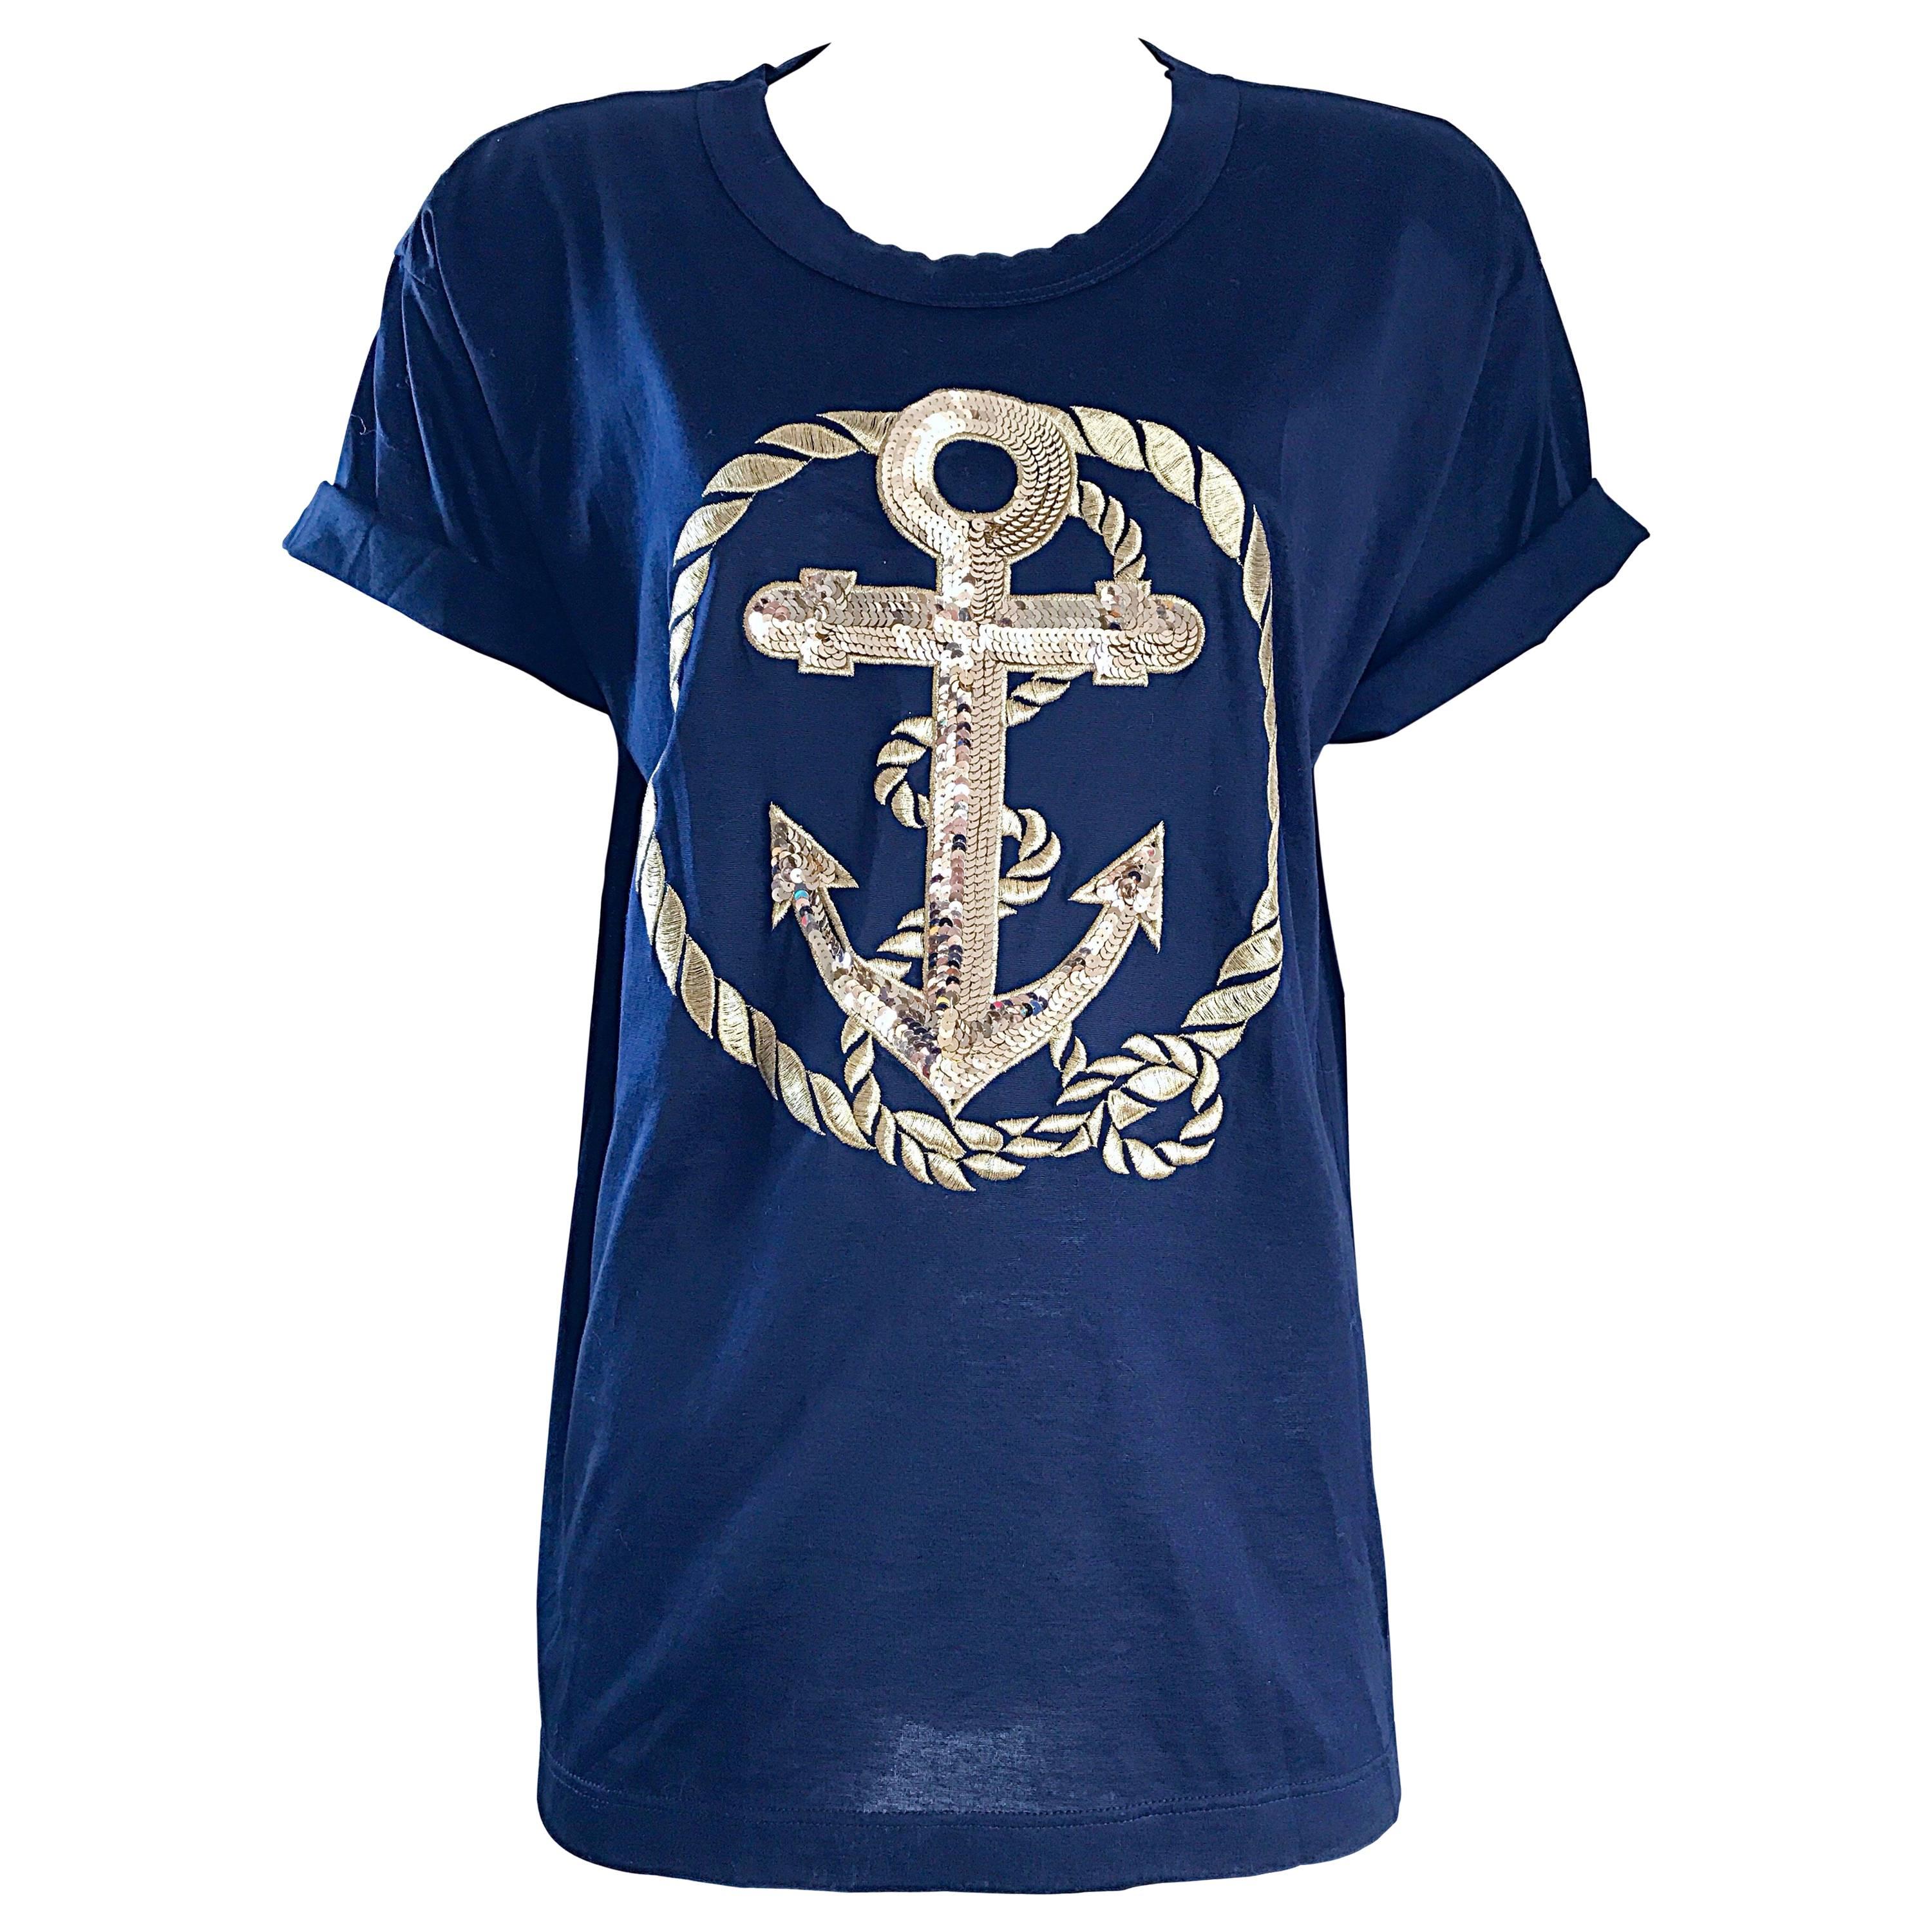 Vintage Escada by Margaretha Ley Navy and Gold Nautical Sequin Tee Shirt Top 